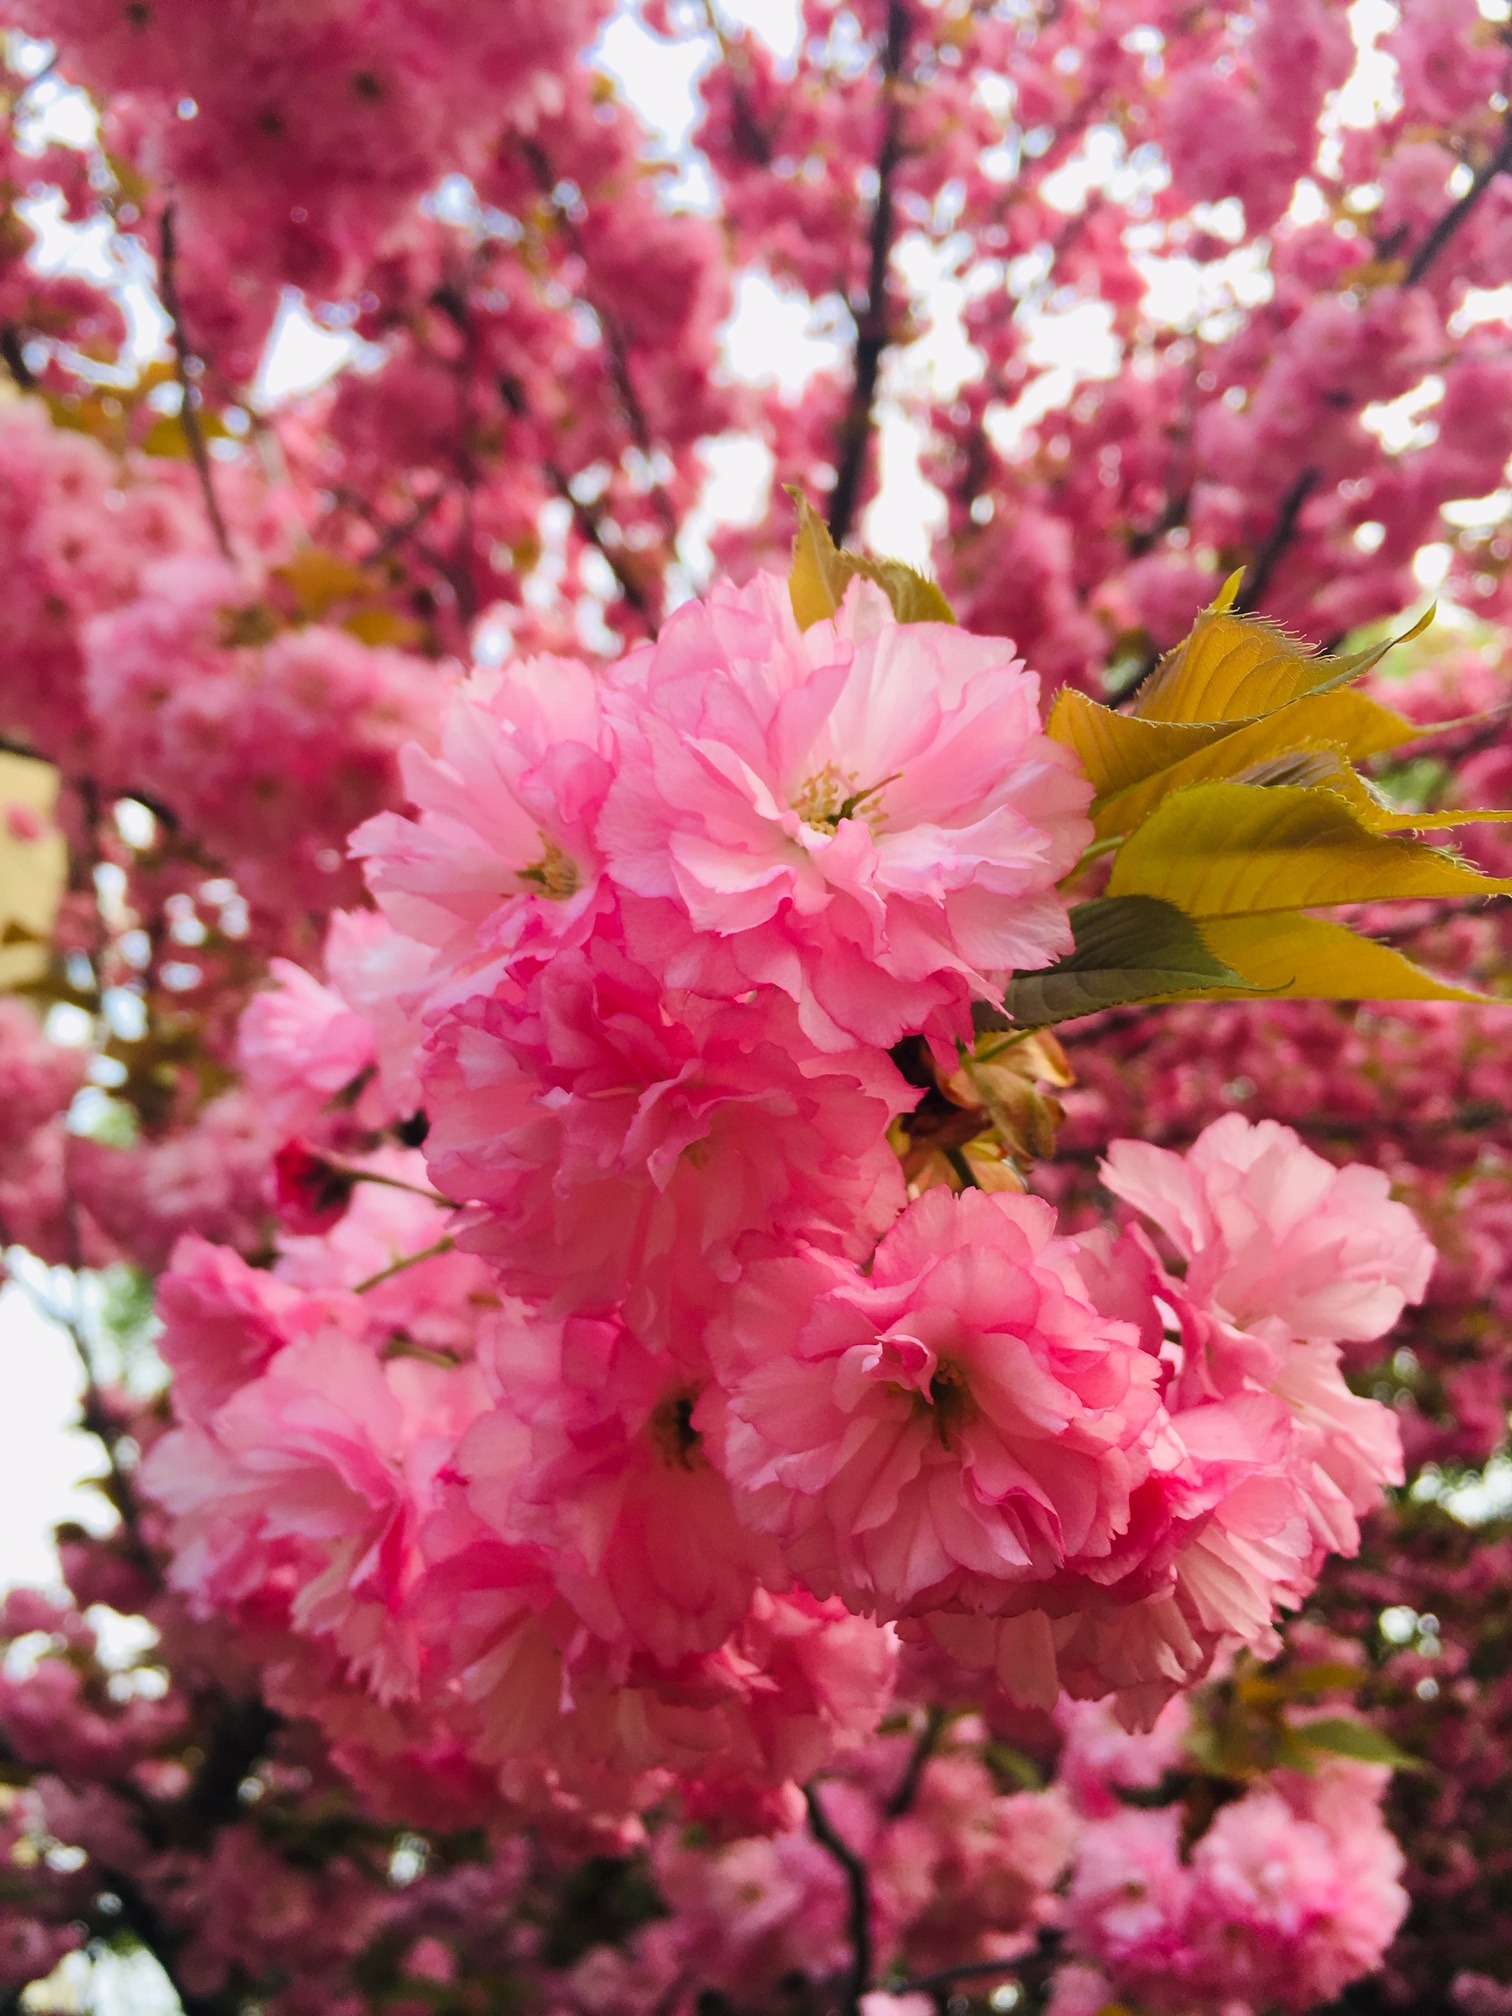 Subaru Cherry Blossom Festival Represents Fragility, Beauty of Life at